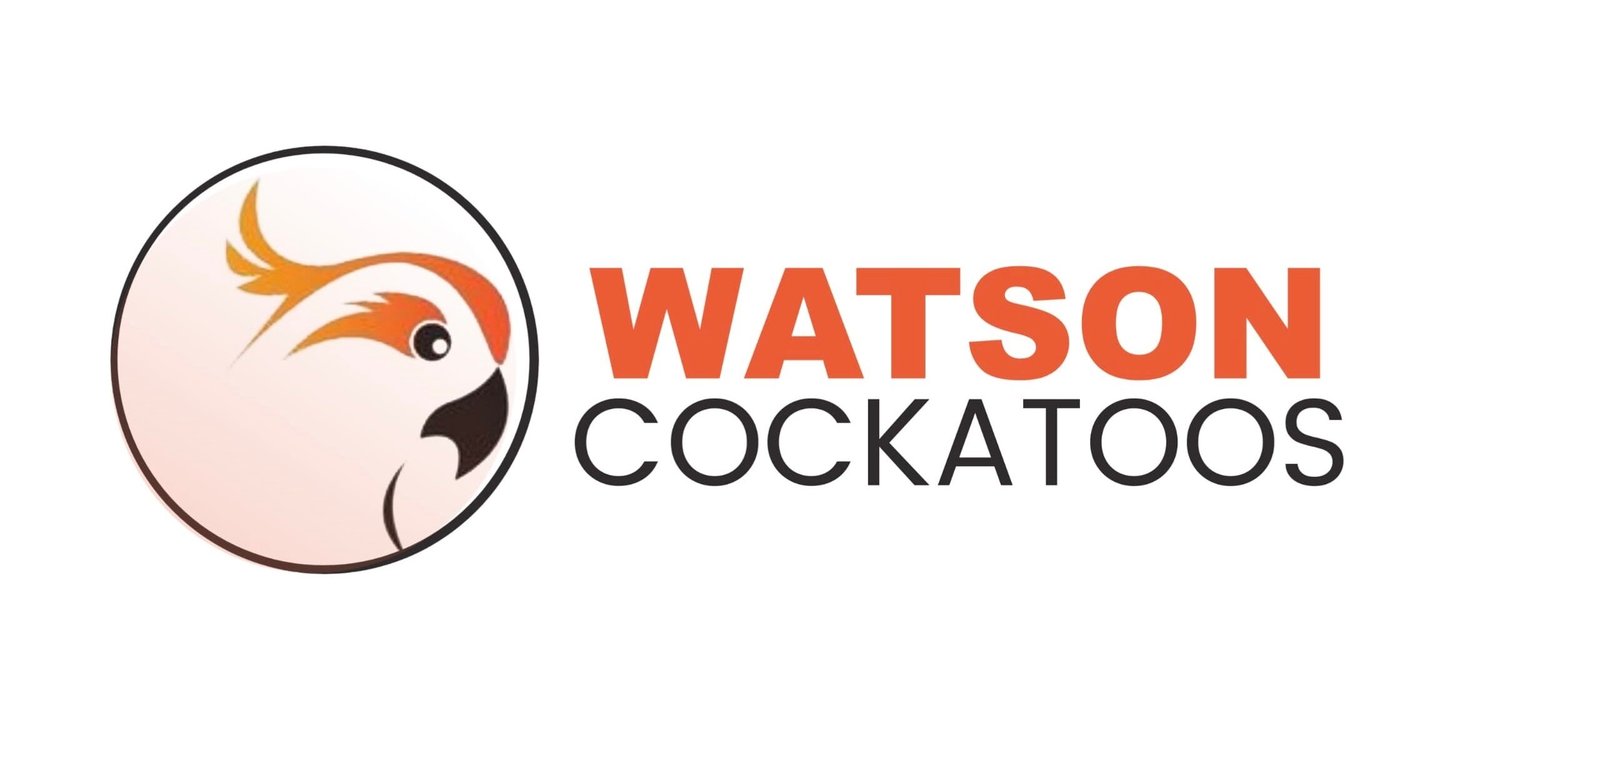 Watson Cockatoos